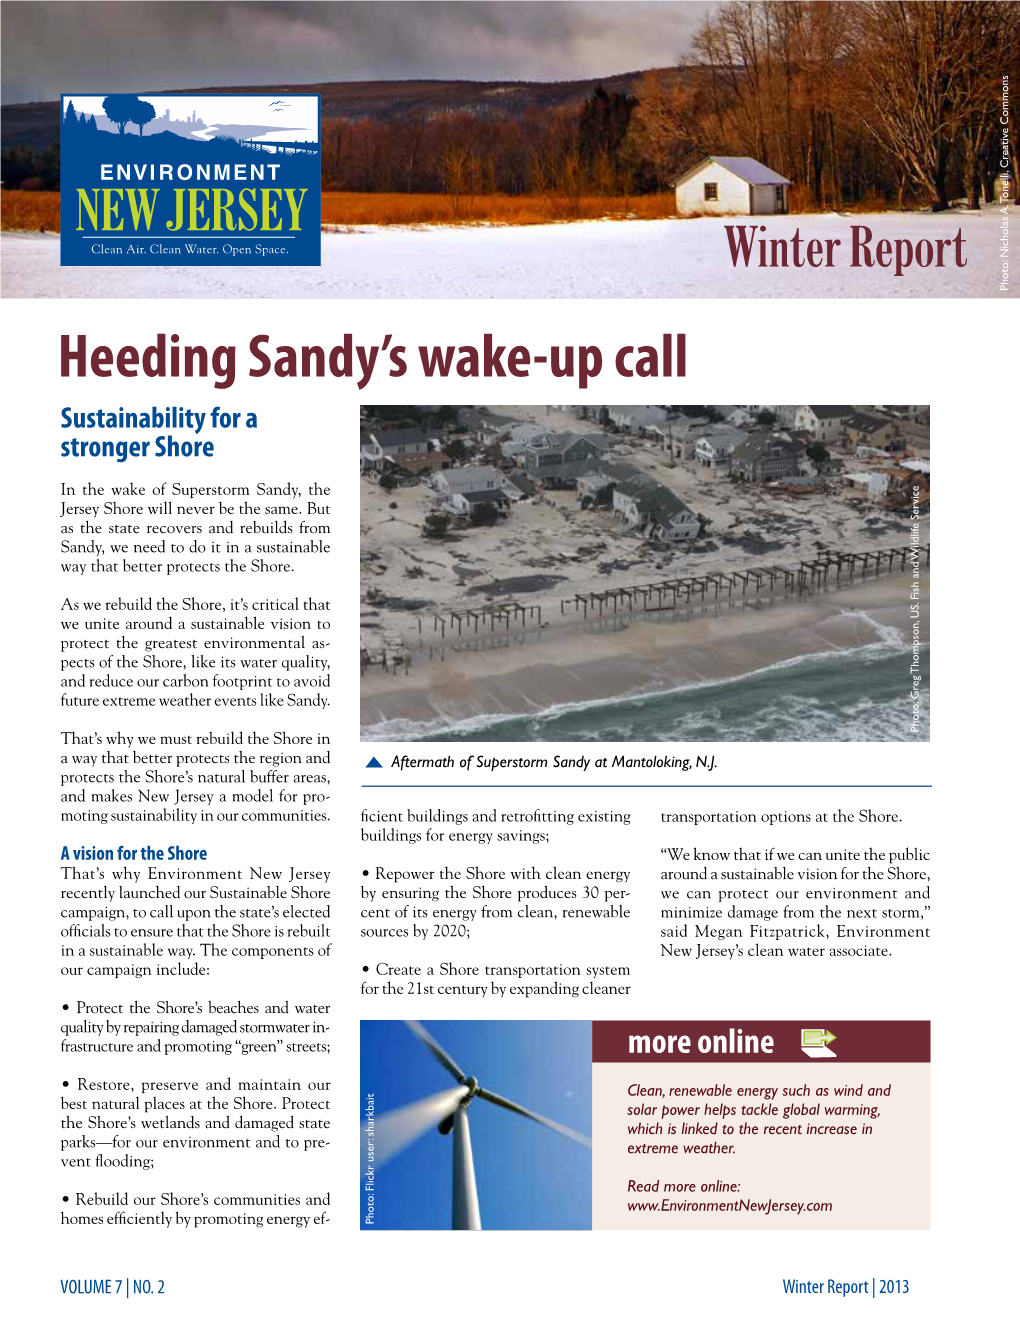 Heeding Sandy's Wake-Up Call